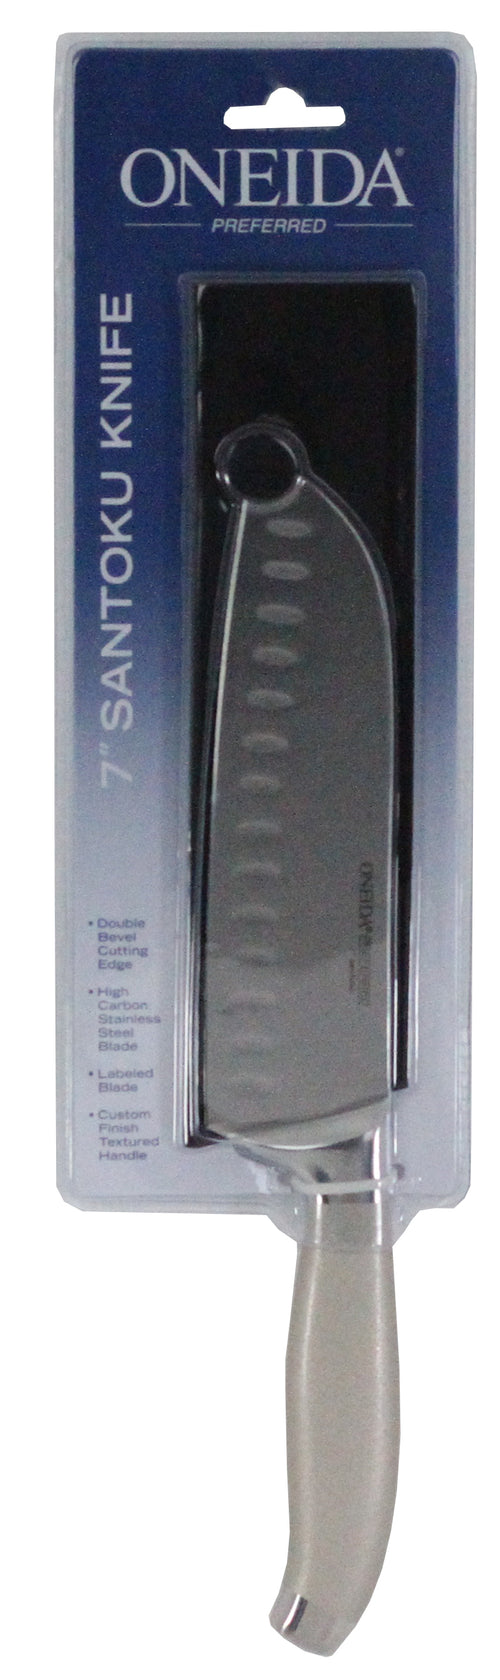 Oneida Preferred 7 Piece Stainless Steel Cutlery Set, 4.45 LB, Metallic